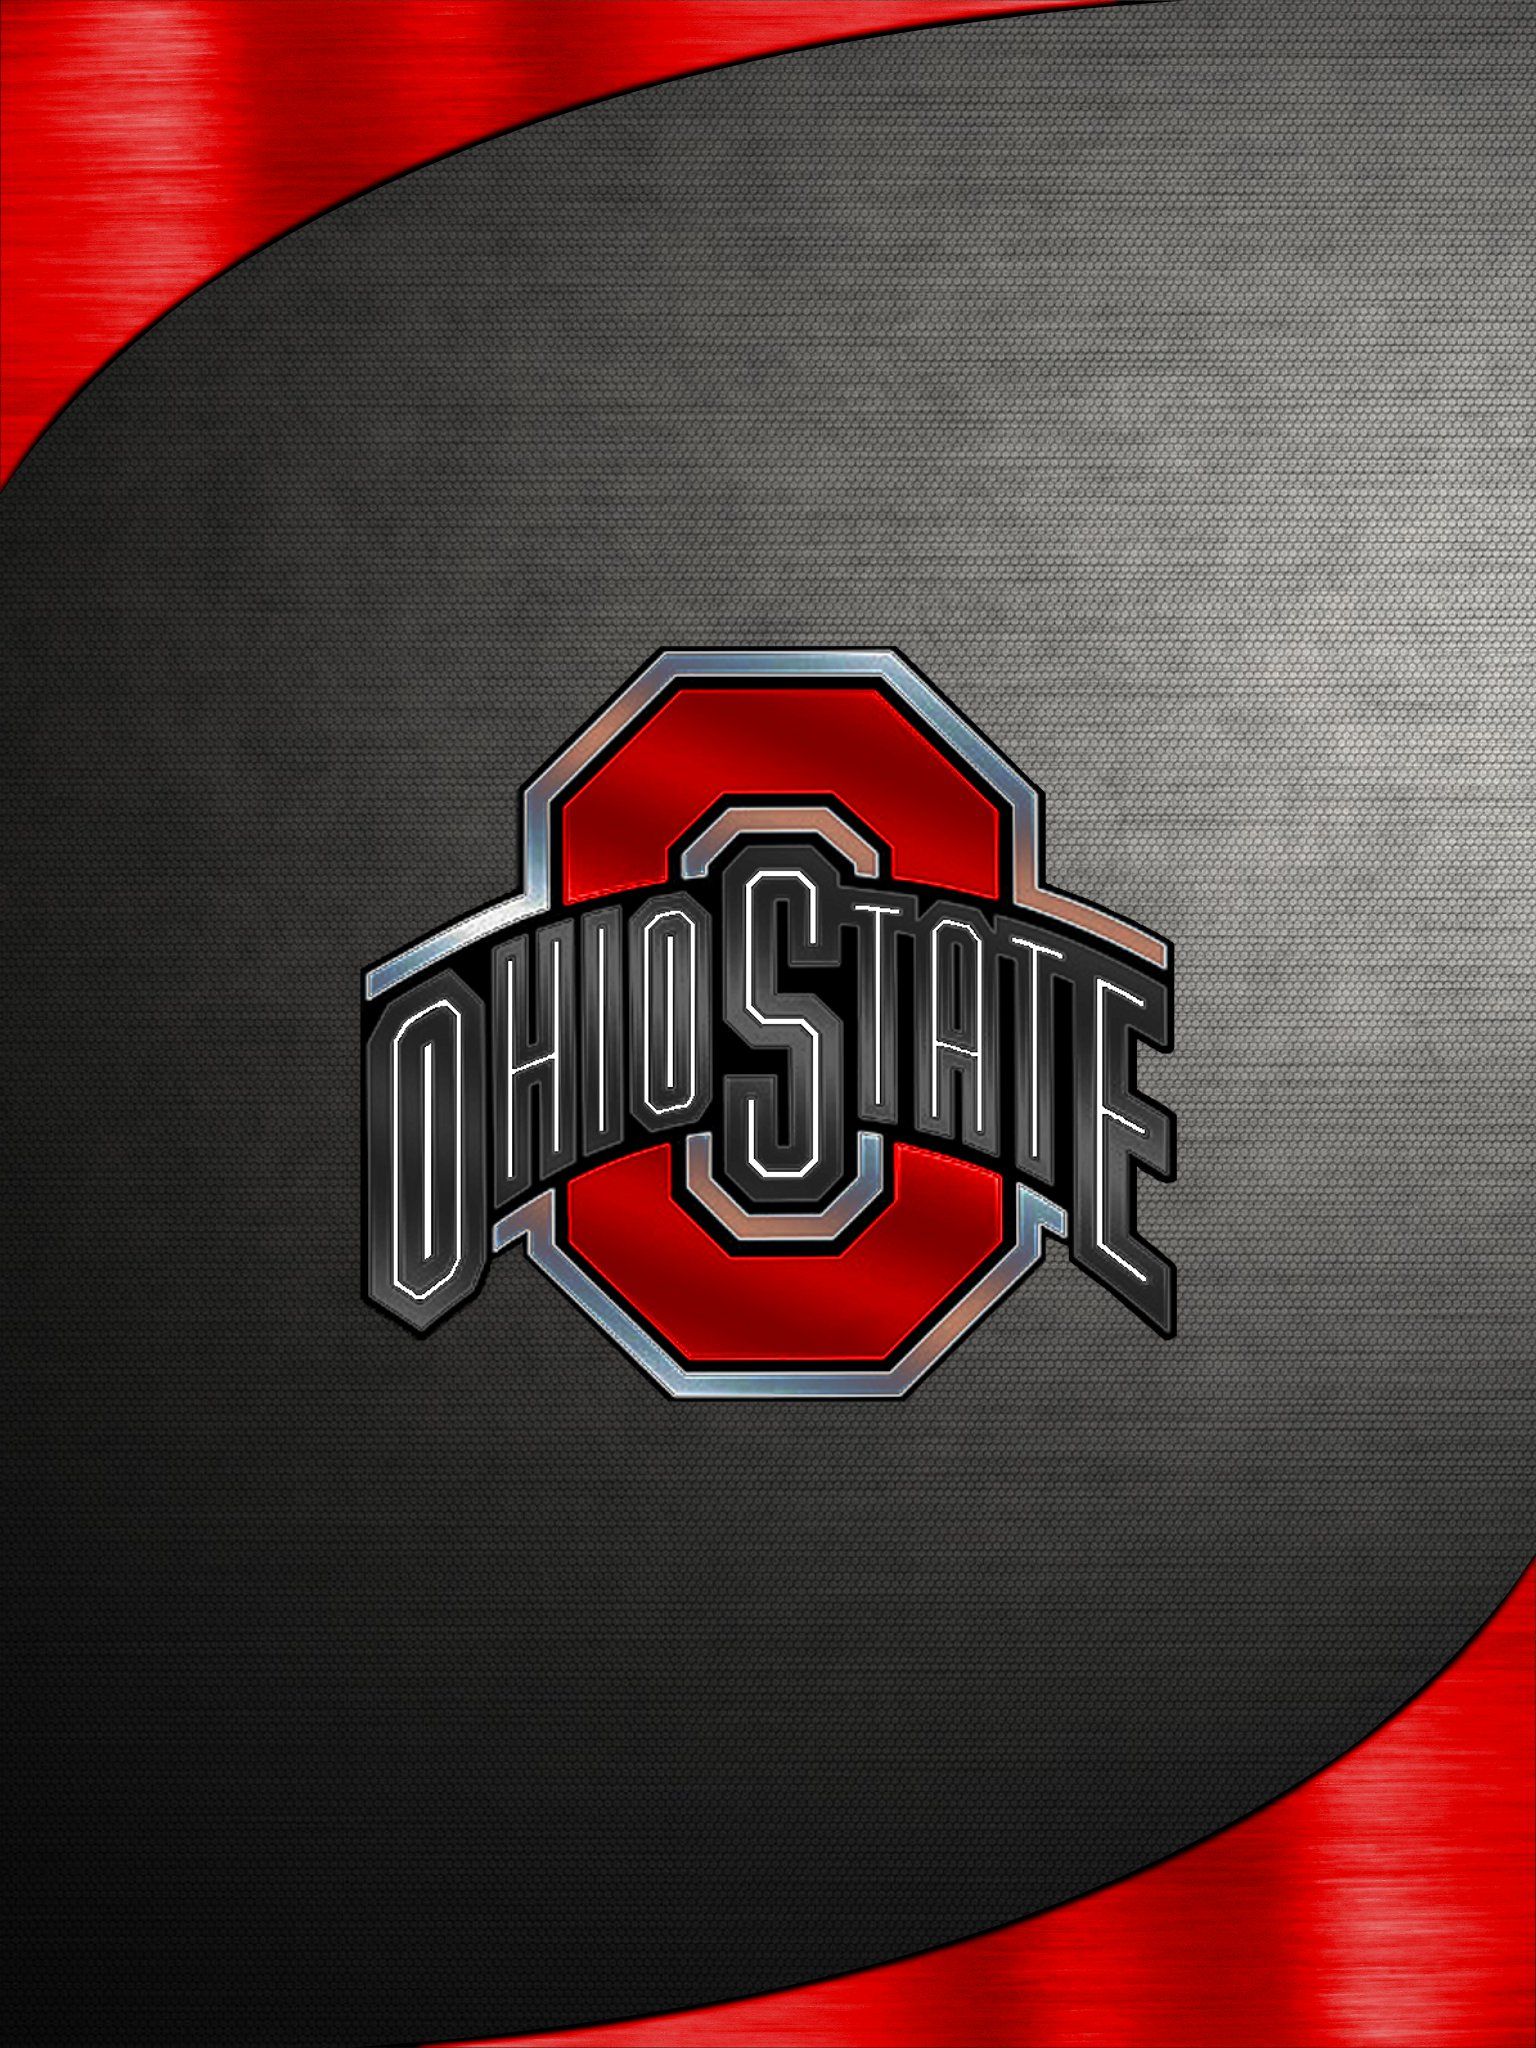 OSU ipad 2 Wallpaper 41 - Ohio State Football Photo (33541138 ...